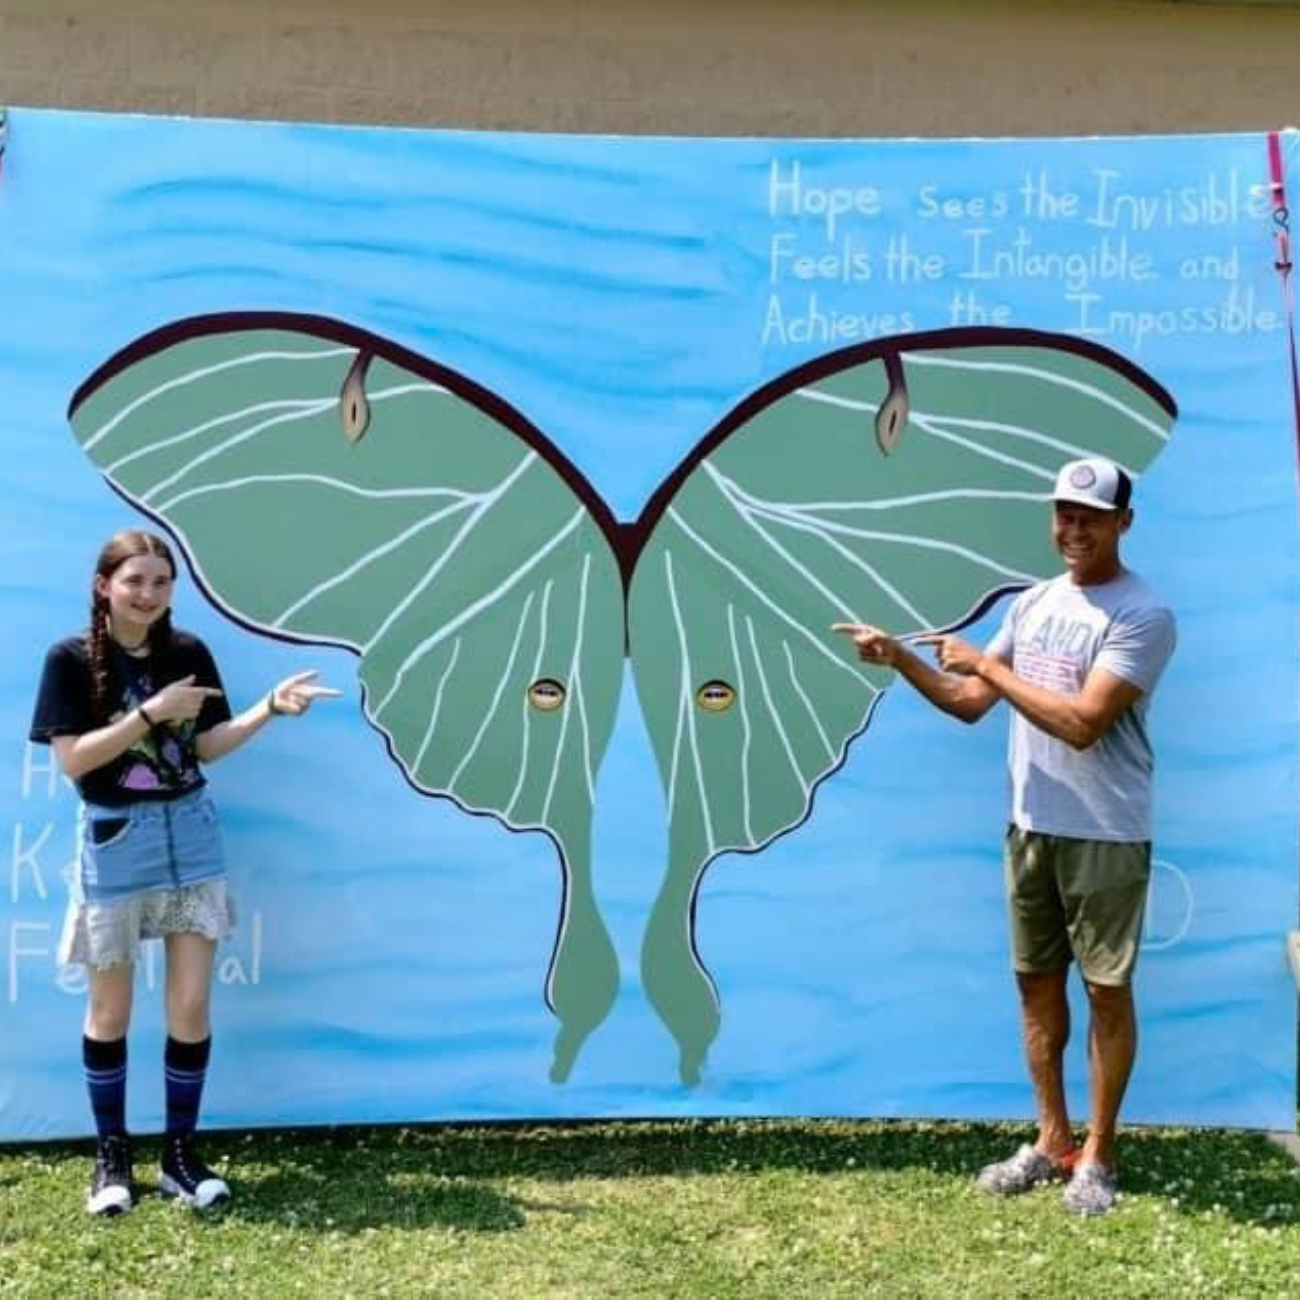 butterfly mural